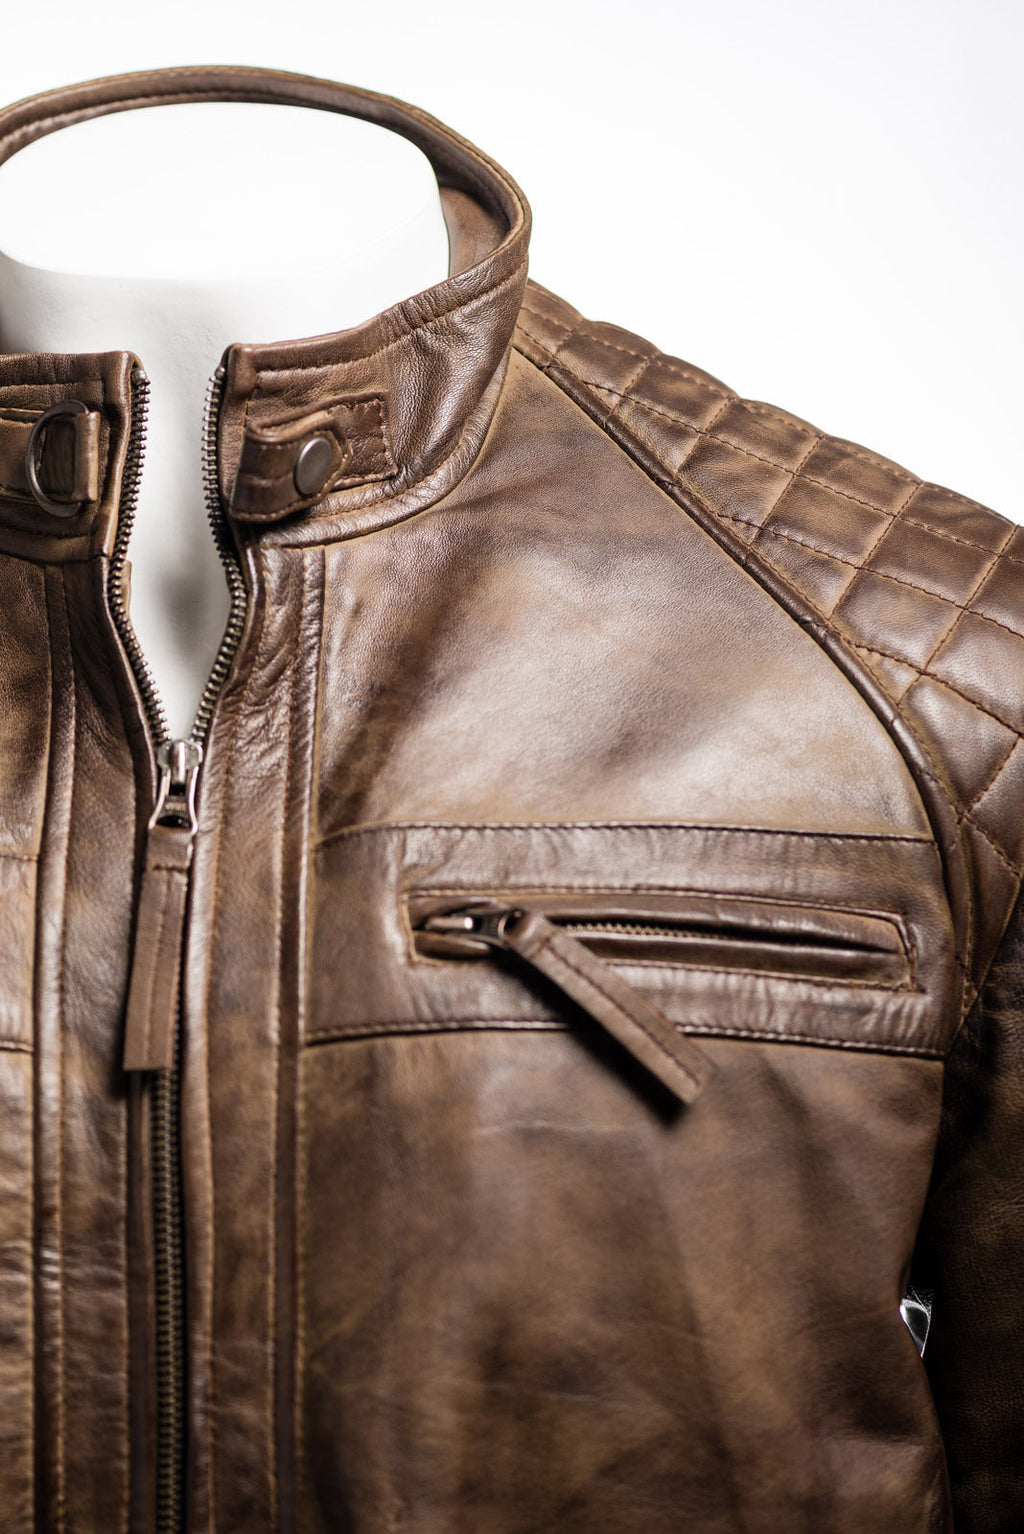 Men's Antique Brown Diamond Shoulder Biker Style Leather Jacket: Geronimo